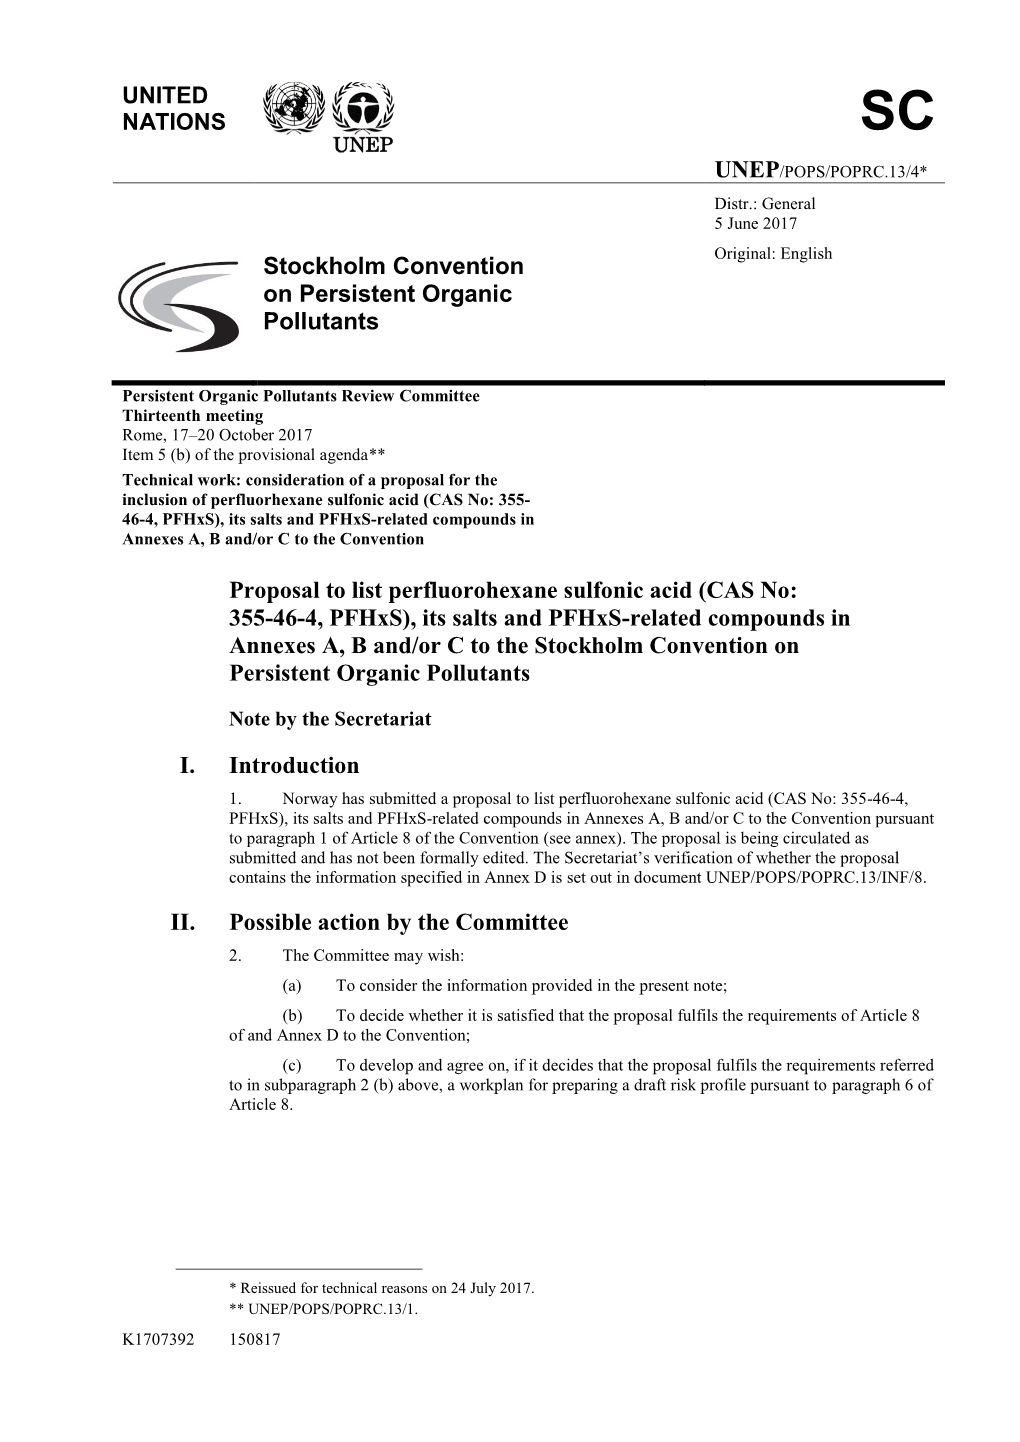 Proposal to List Perfluorohexane Sulfonic Acid (CAS No: 355-46-4, Pfhxs)